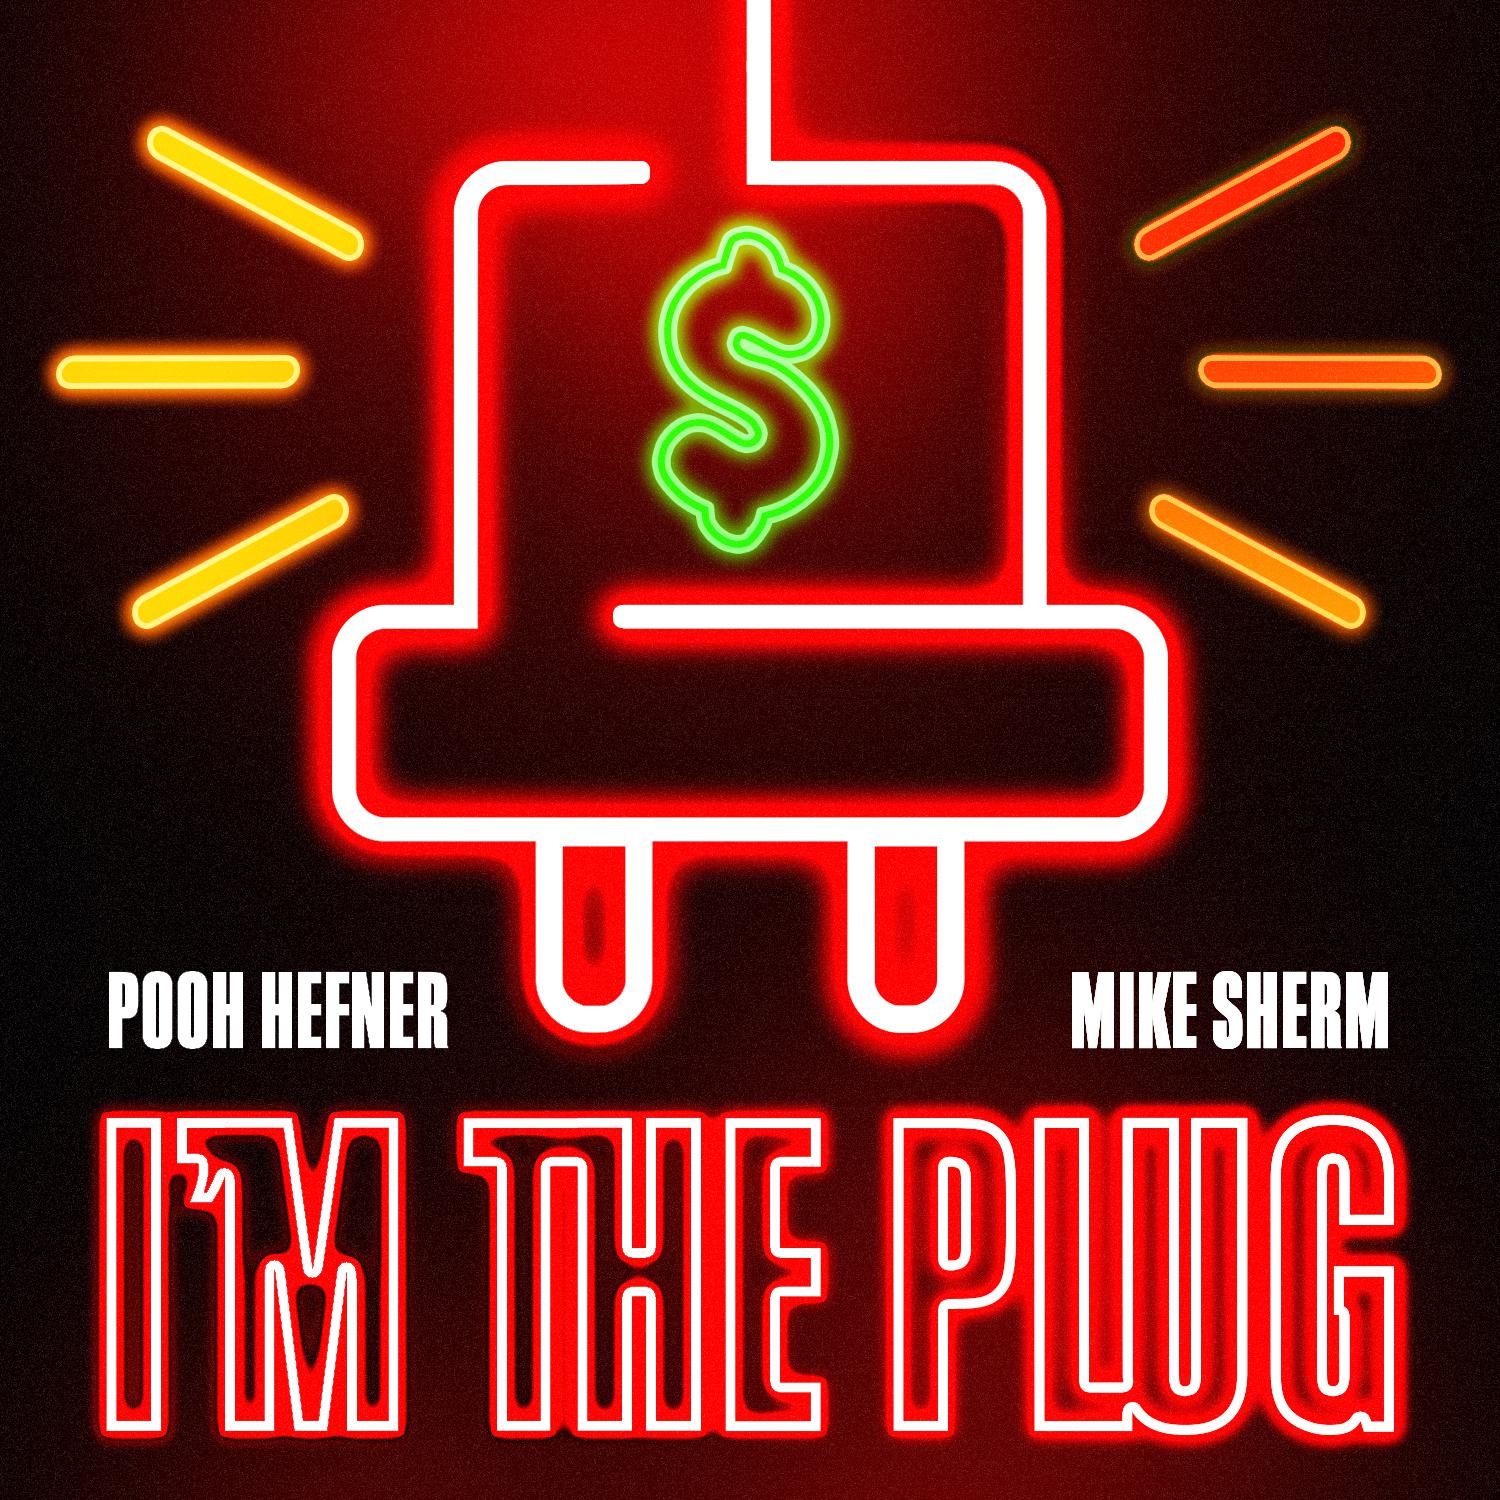 I'm the Plug